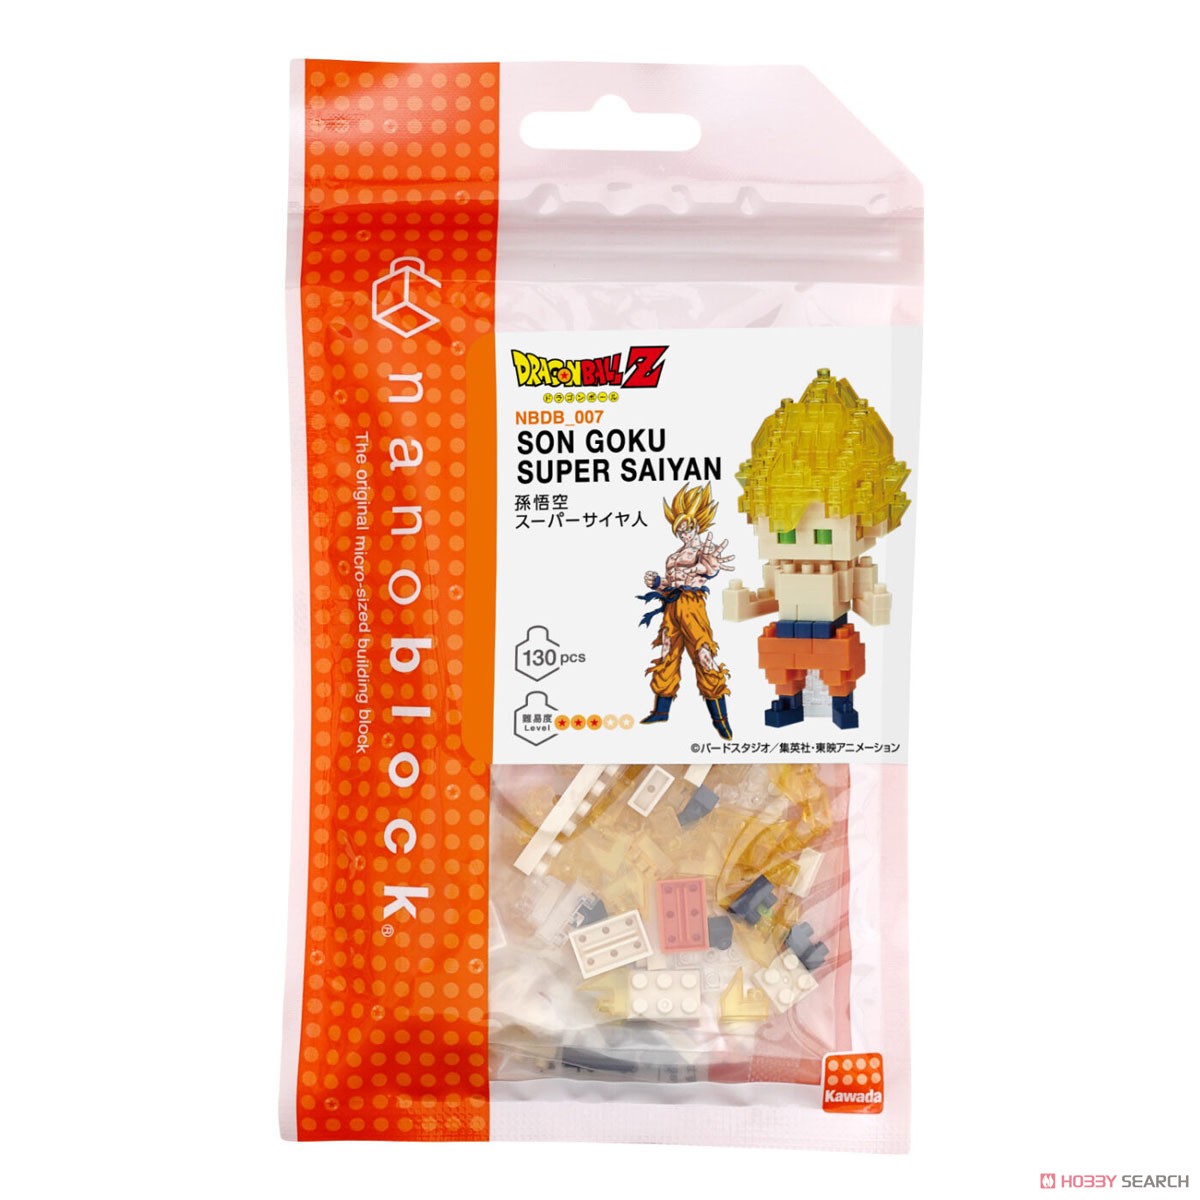 nanoblock Son Goku Super Saiyan (Block Toy) Package1